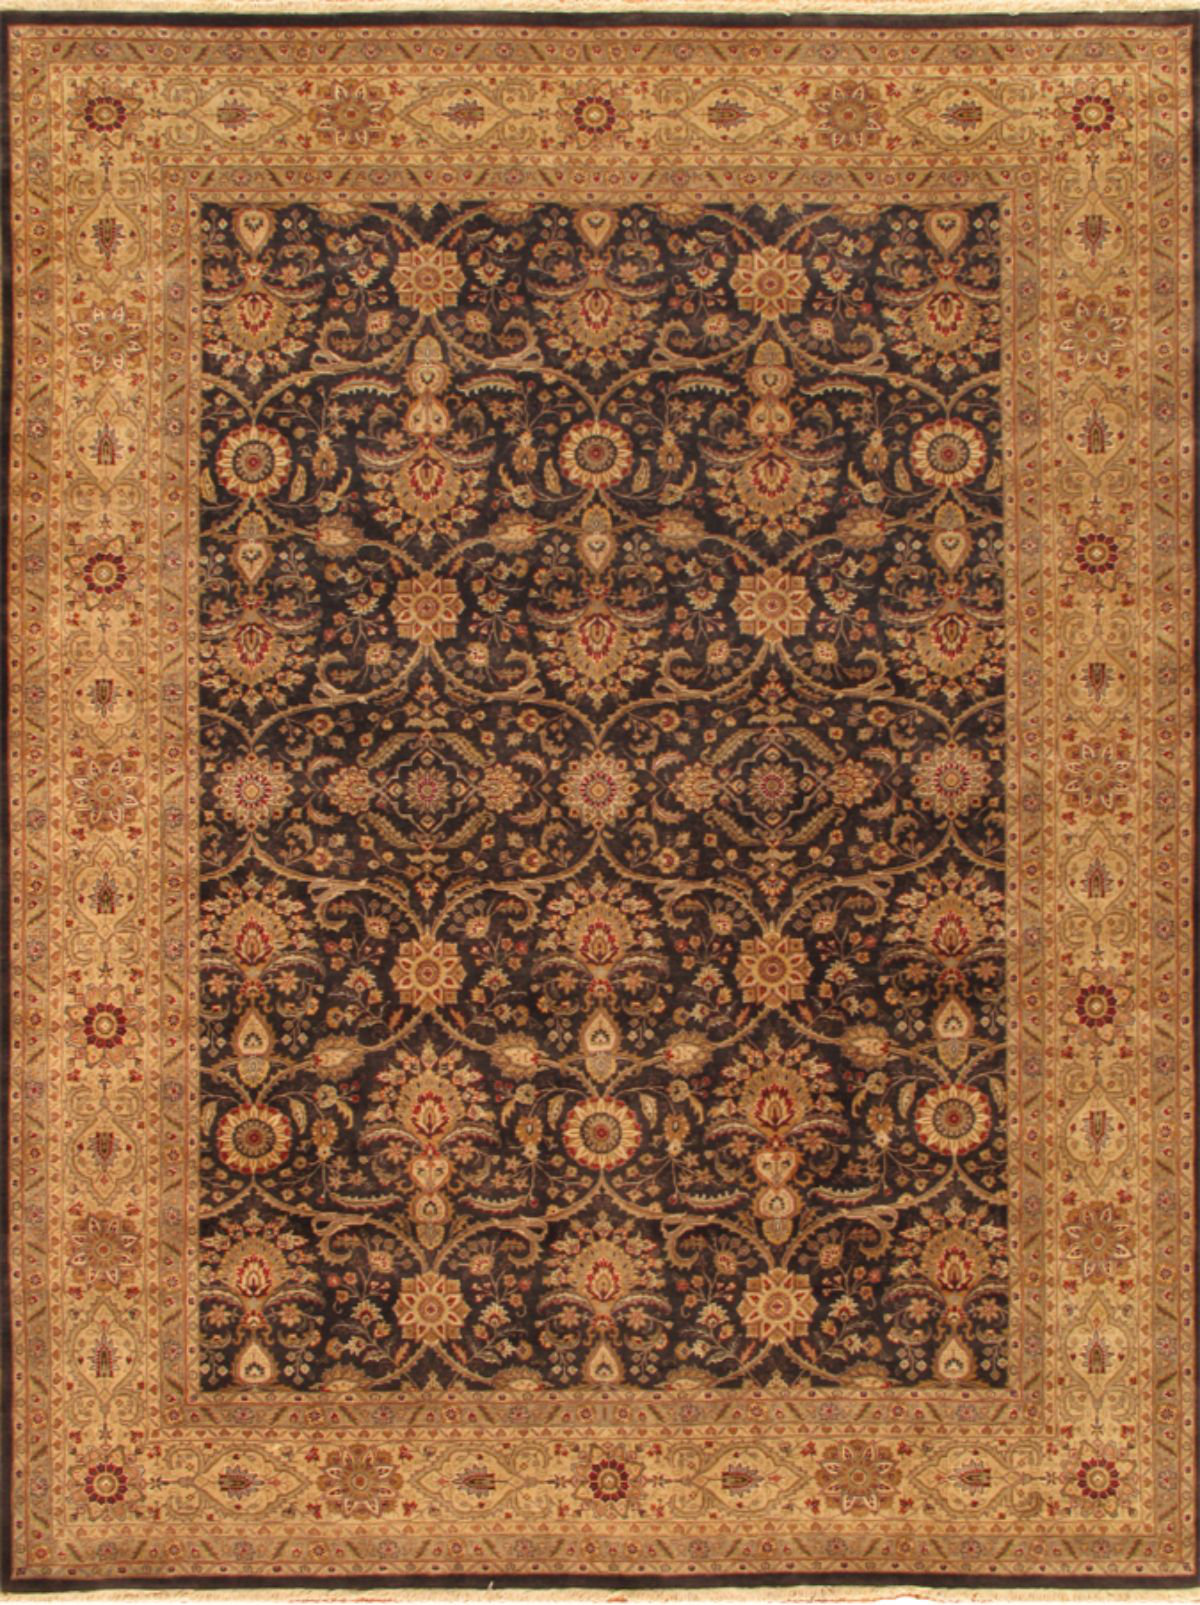 Moroccan Scroll Tile Riyana 5' X 7' Feet Orange Color Hand Tufted Persian Style 100% Wool Area Rug /Carpet 